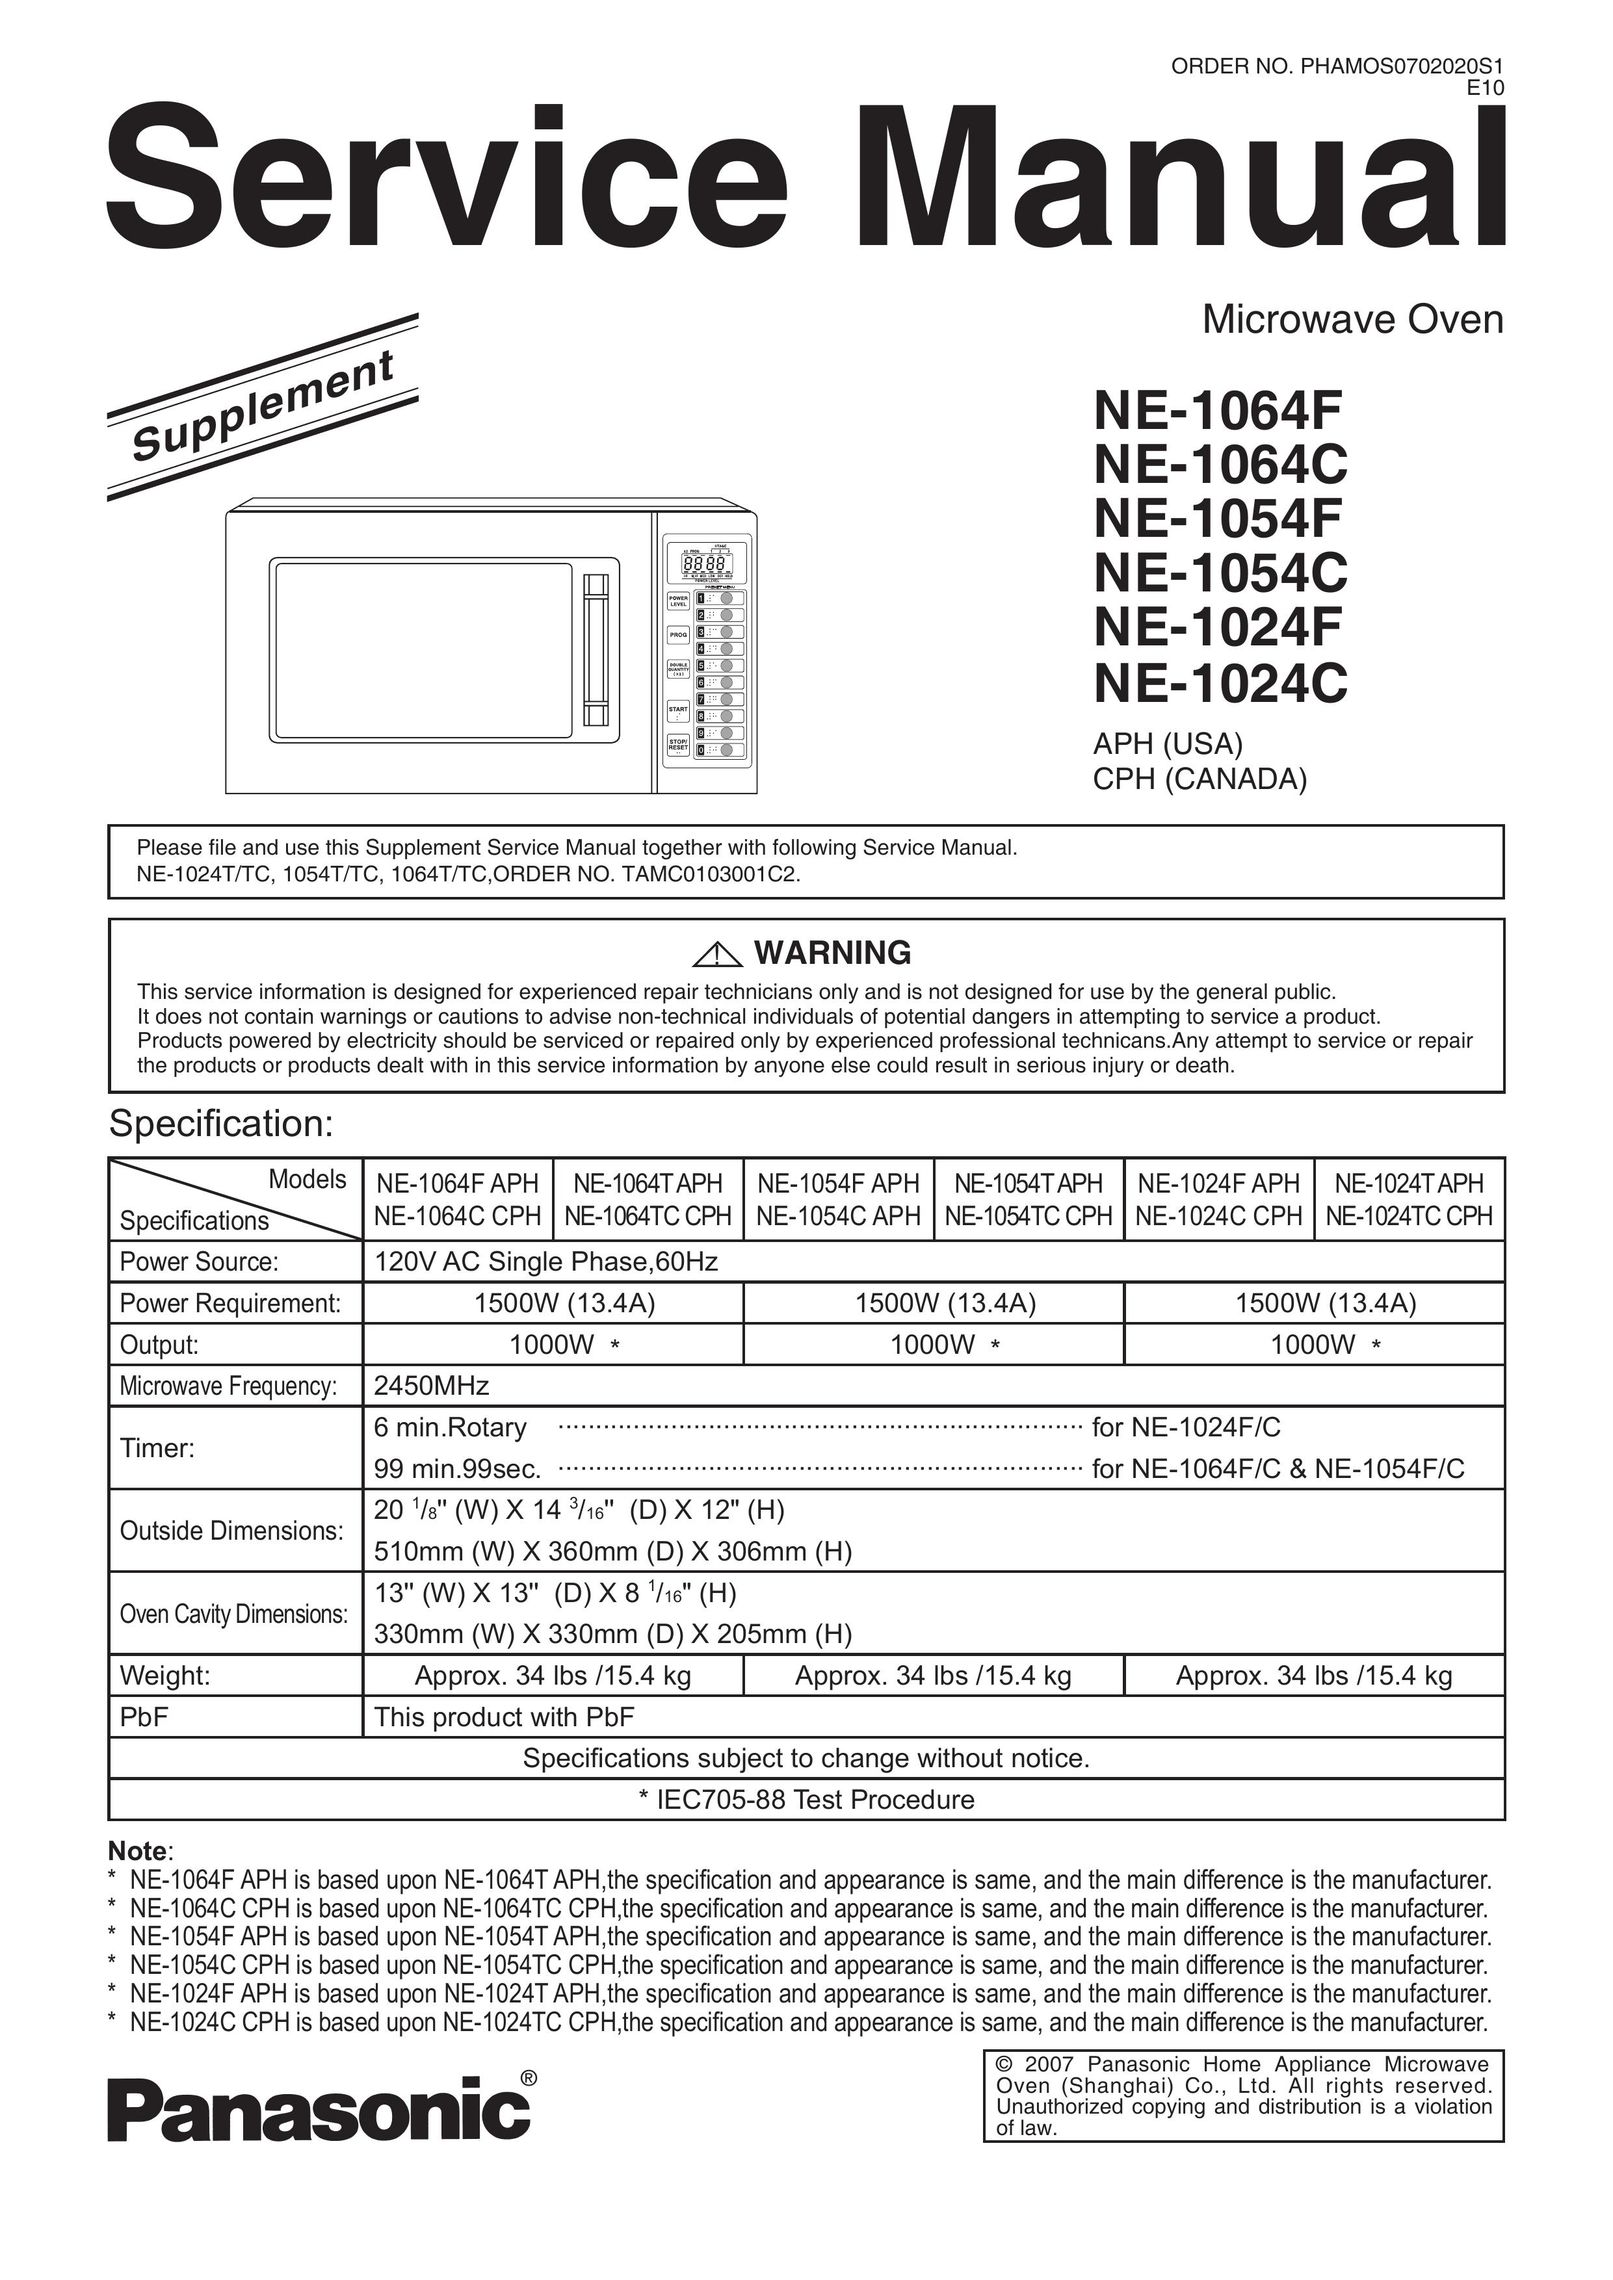 Panasonic NE-1054C Microwave Oven User Manual